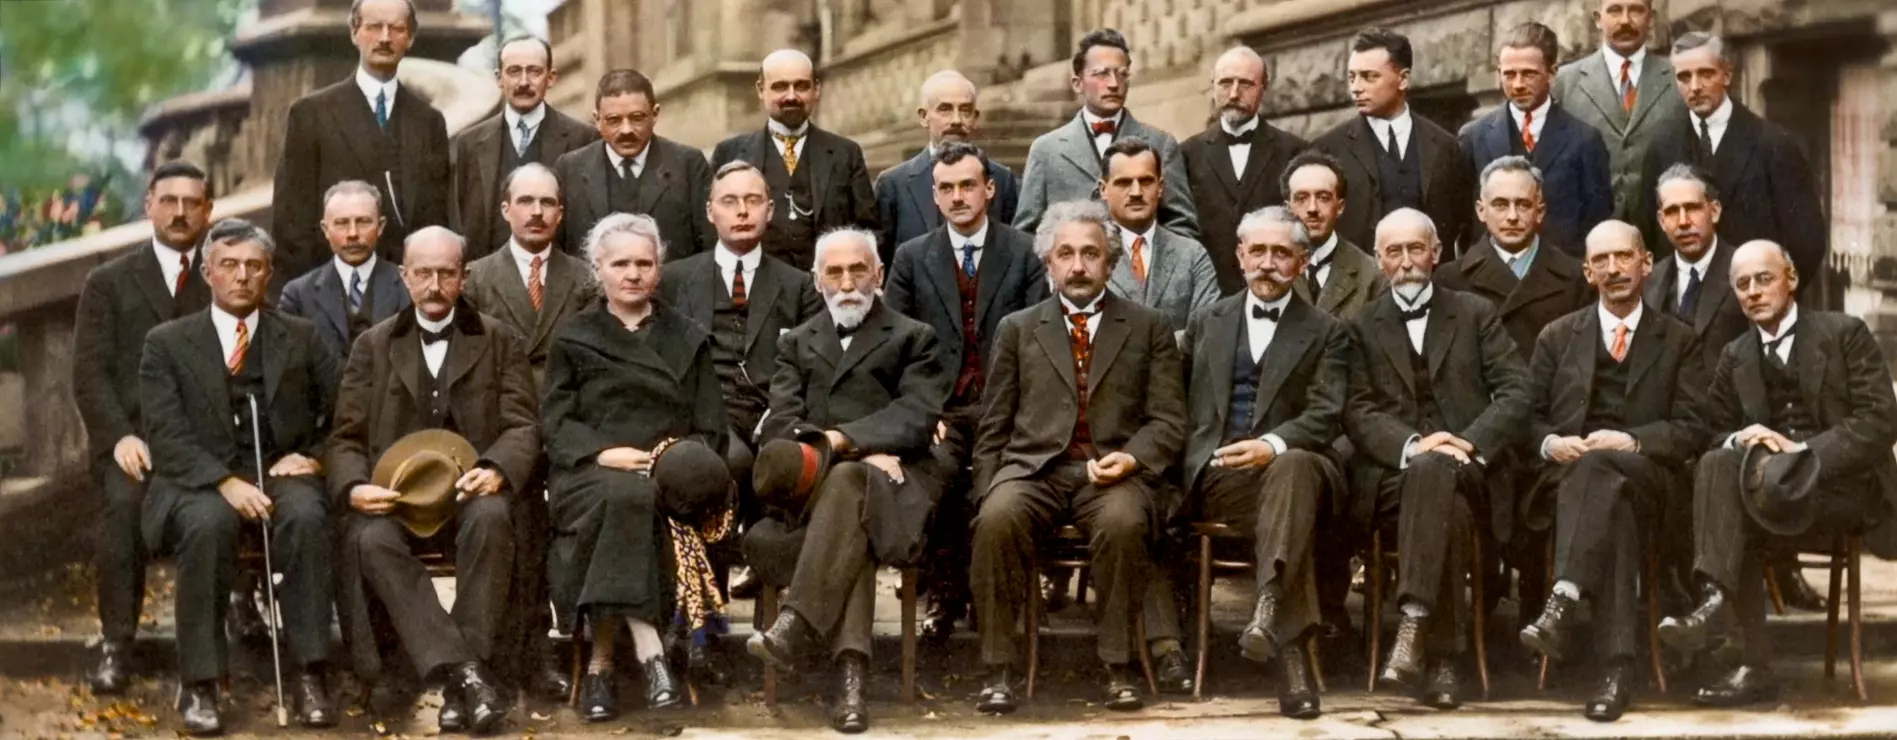 Fifth conference participants, 1927. Institut International de Physique Solvay in Leopold Park.